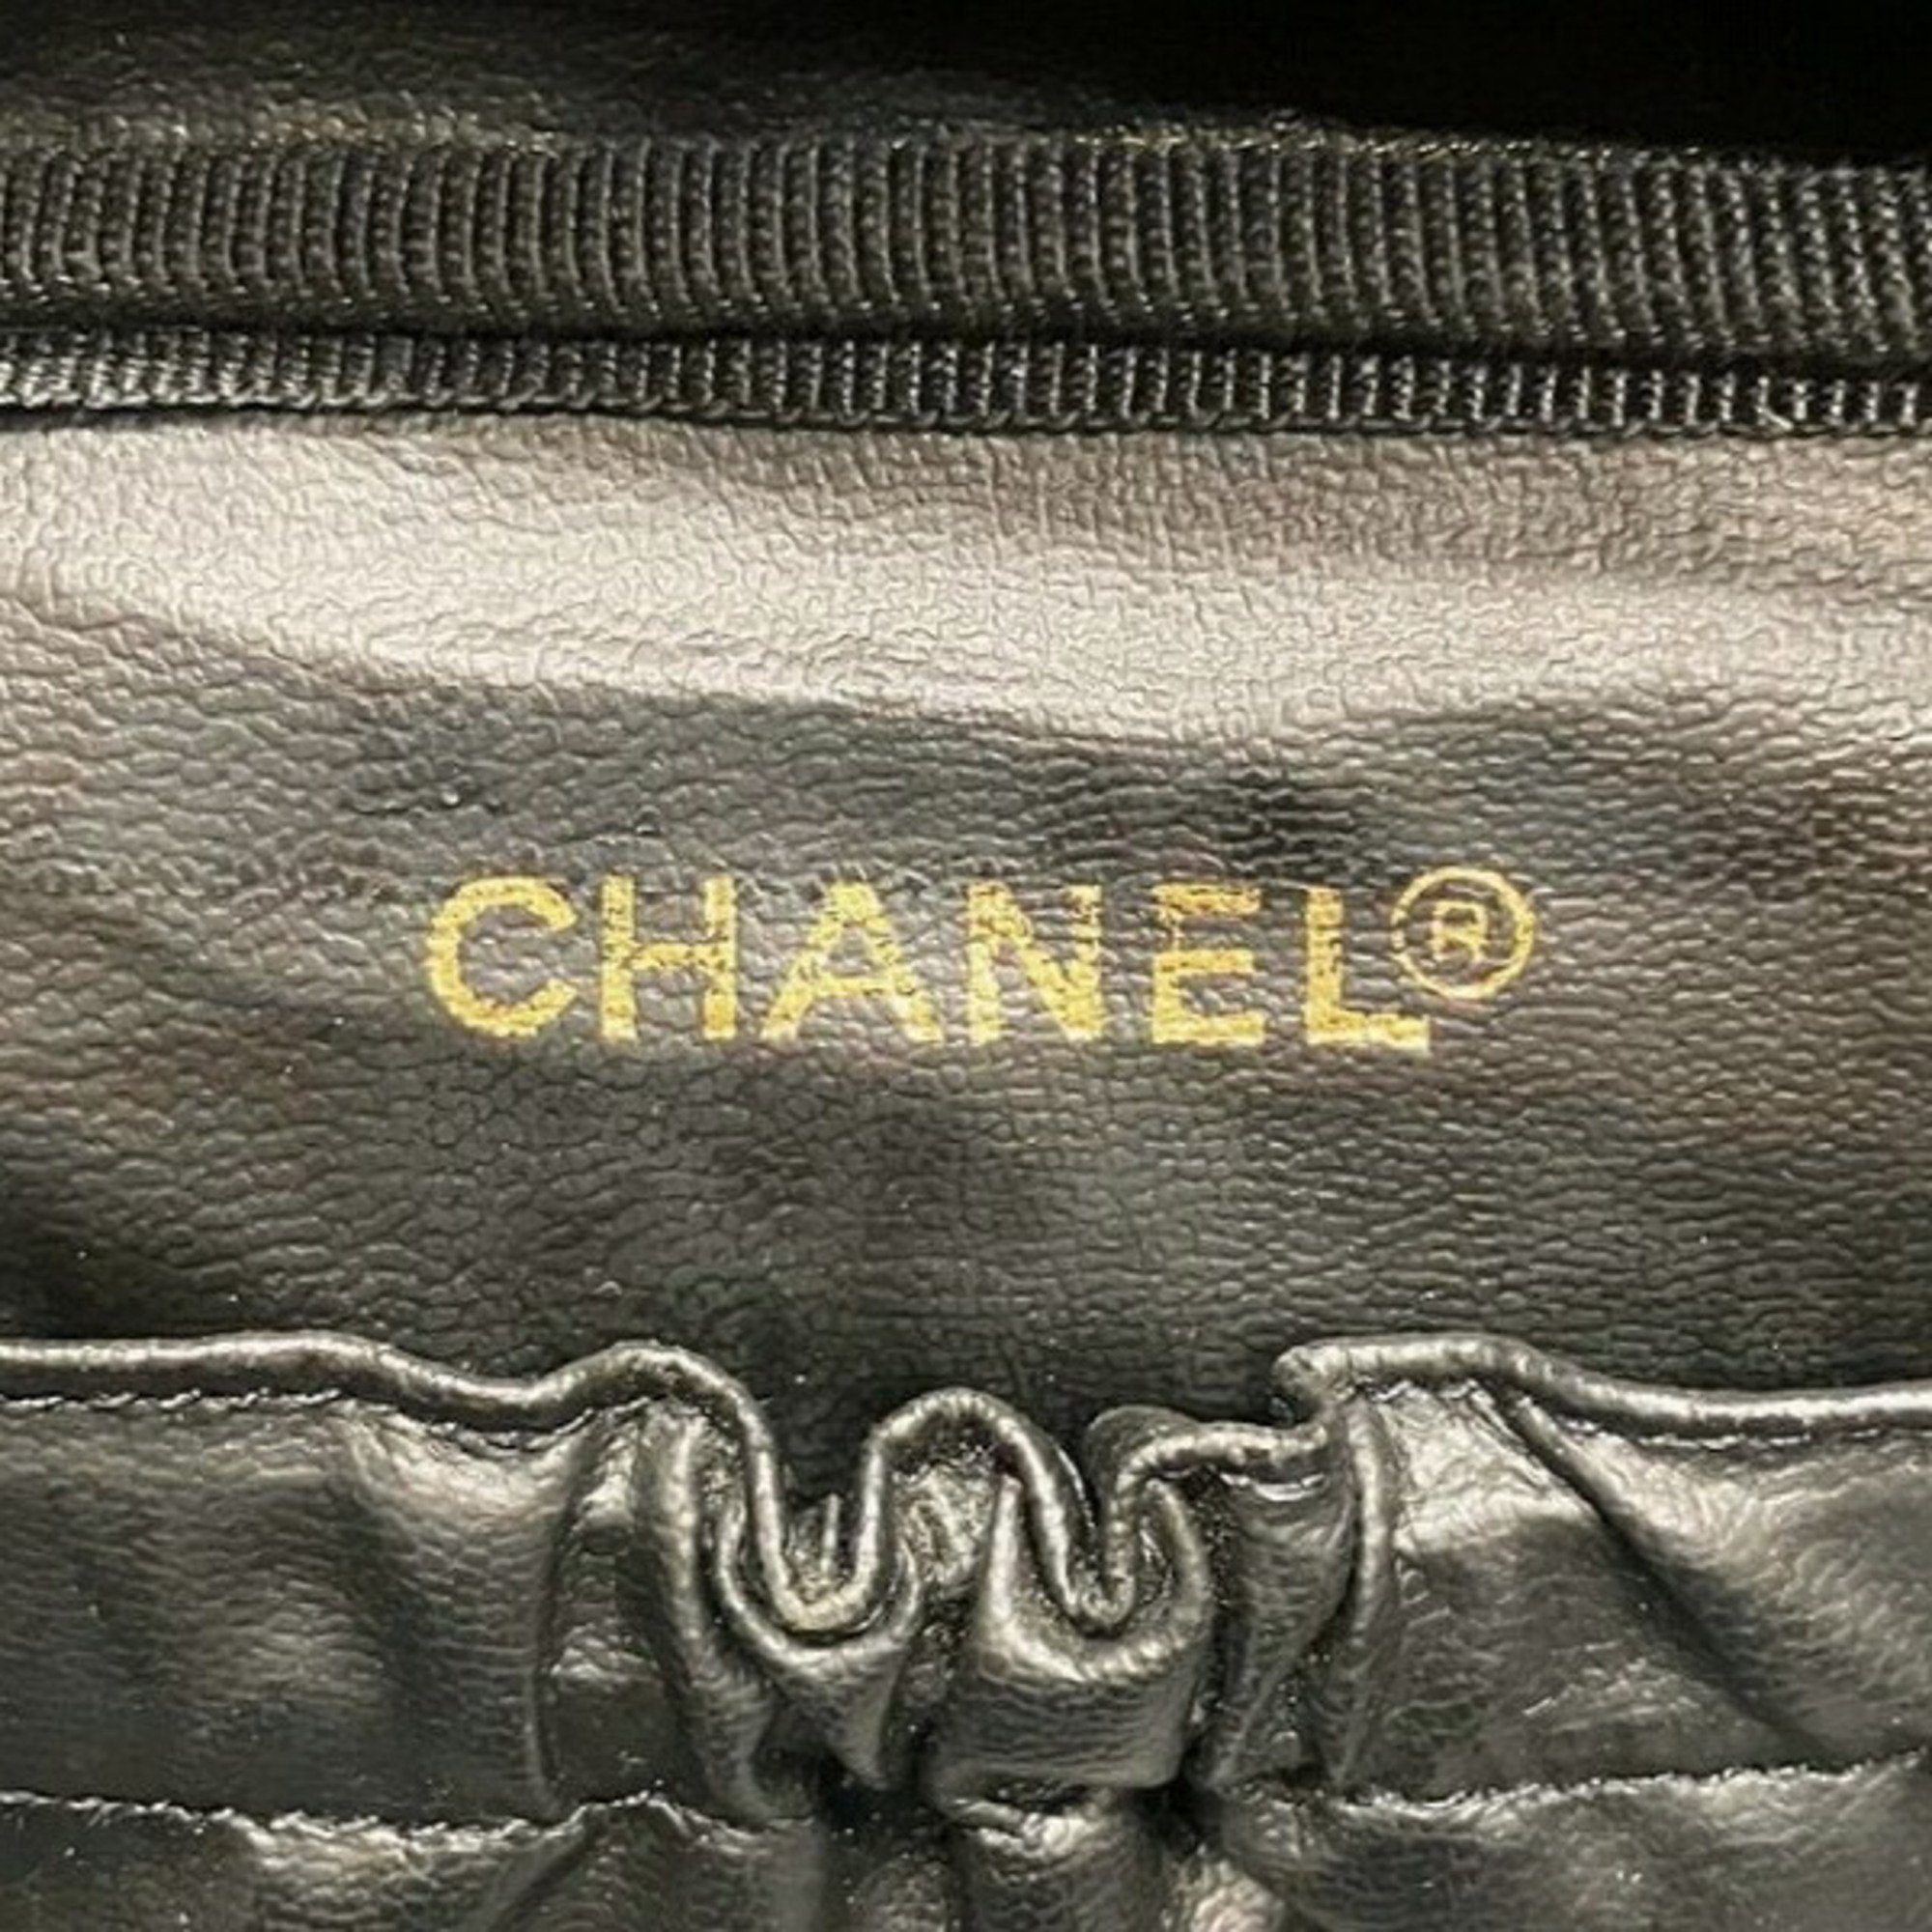 CHANEL Vanity Pouch Caviar Skin Bag Handbag Women's